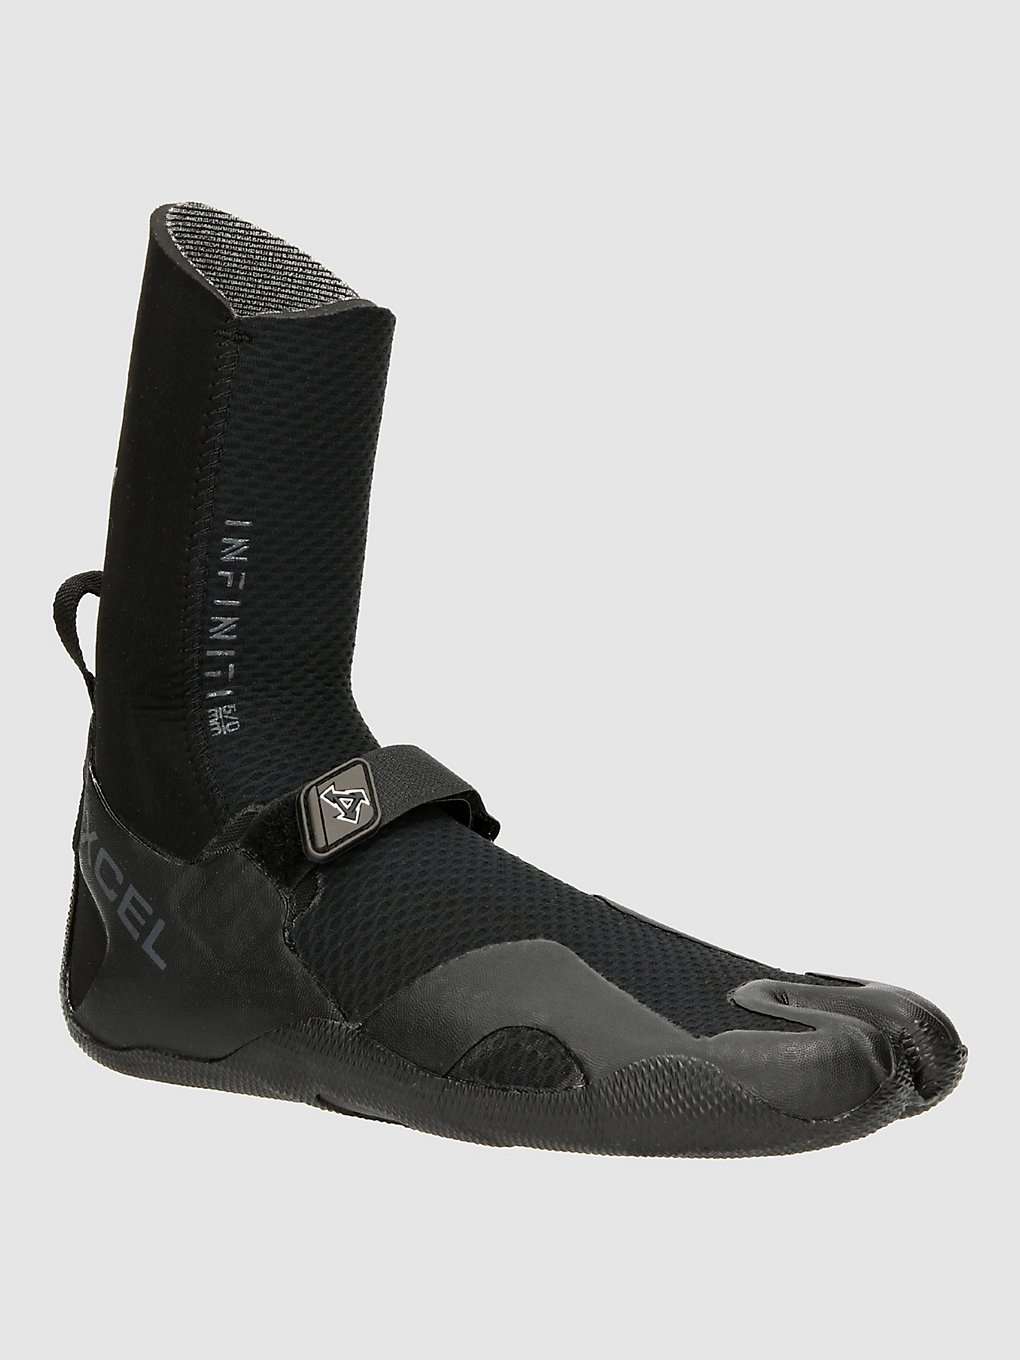 Xcel Split Toe Infinit 5mm Surf schoenen zwart